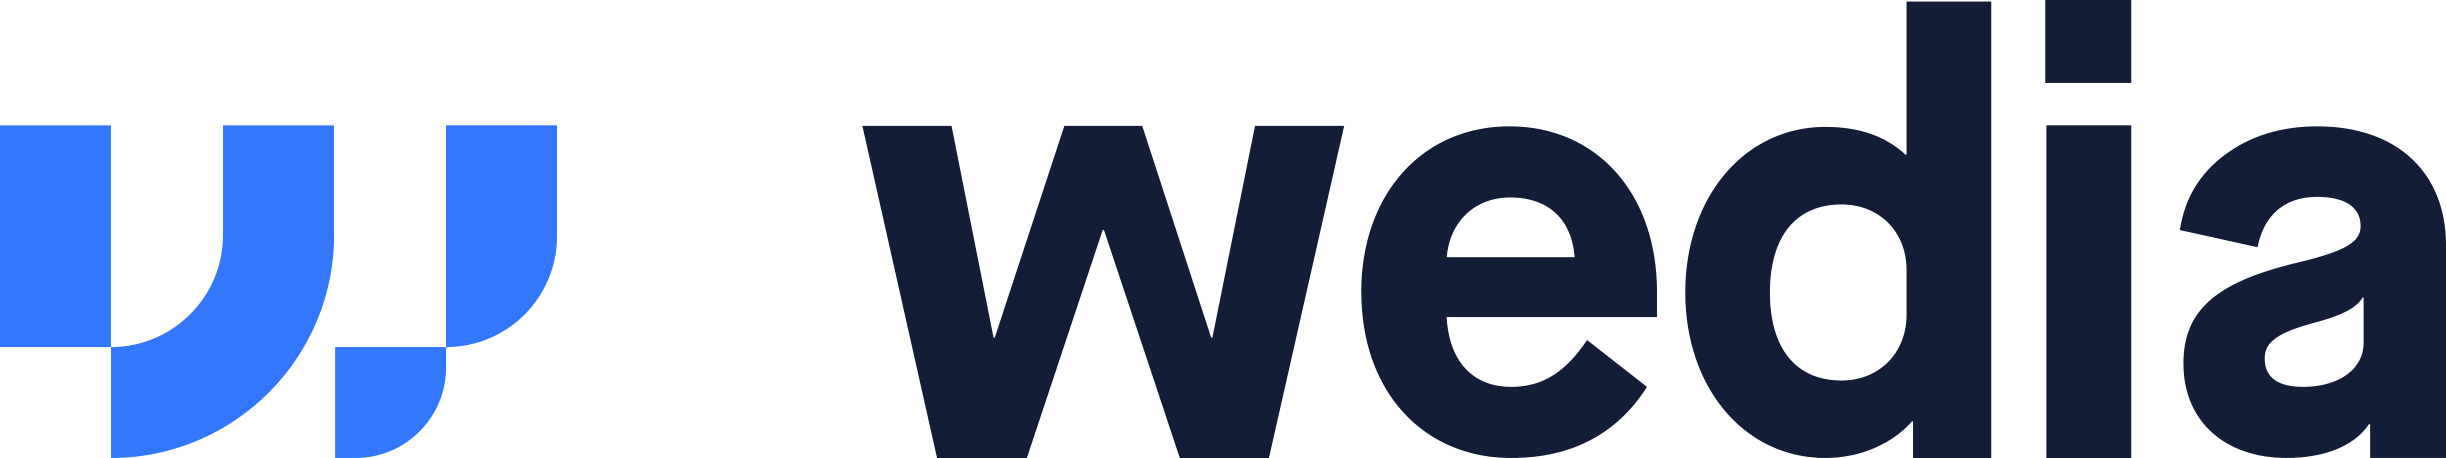 New-Logo-Wedia-Oxford-Blue-Azure-Blue-RVB